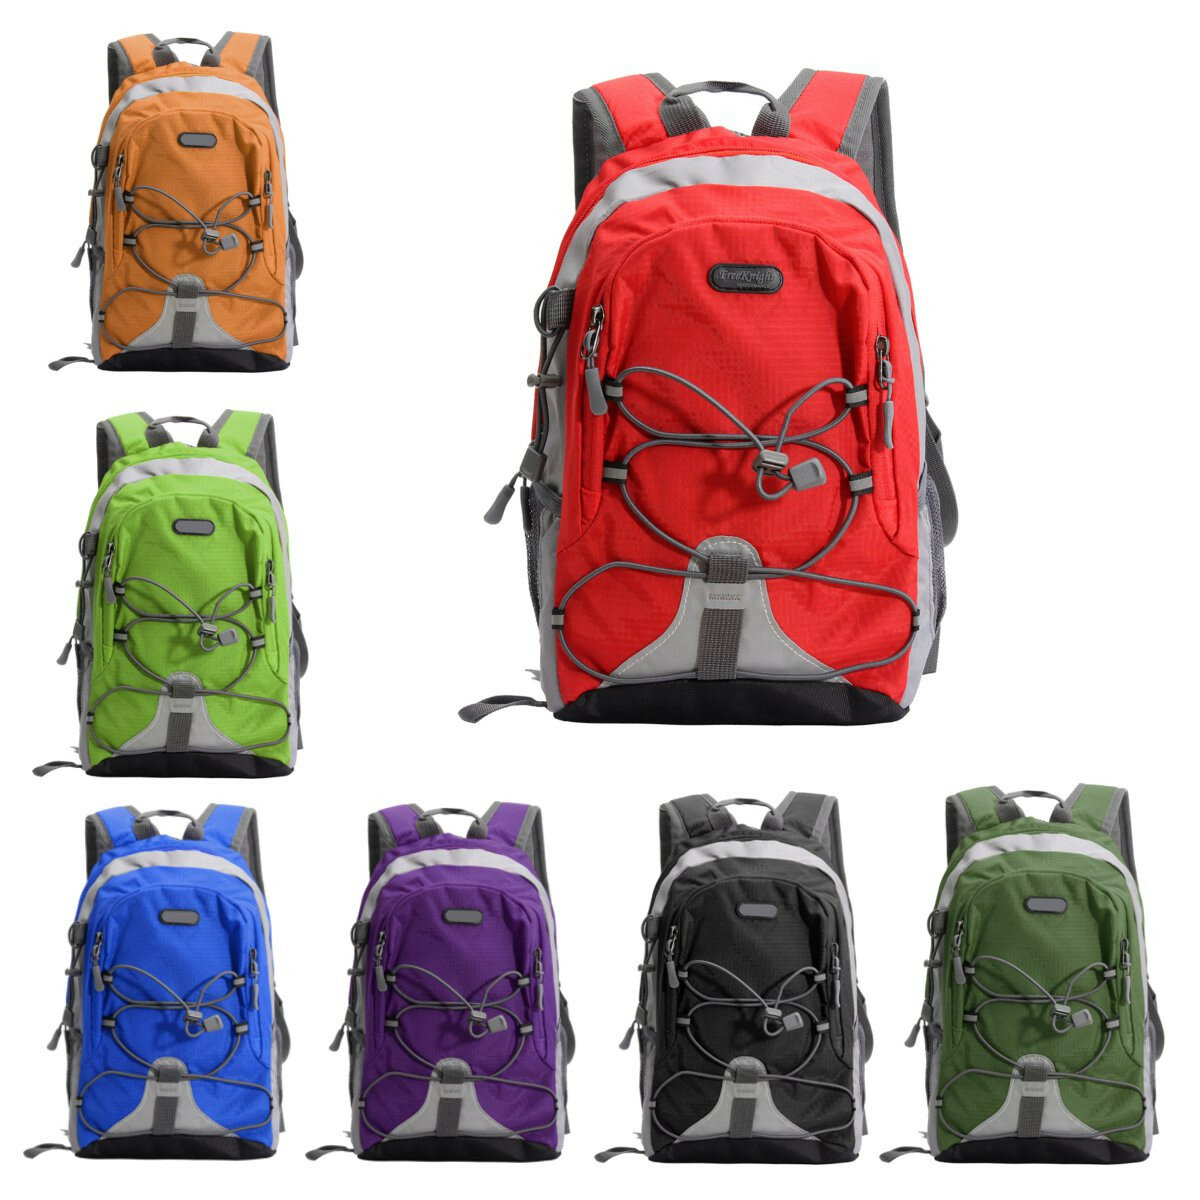 Children's Backpack Waterproof Large Capacity Outdoor Mountaineering Camping Travel Hiking Bag Shoulder Bag